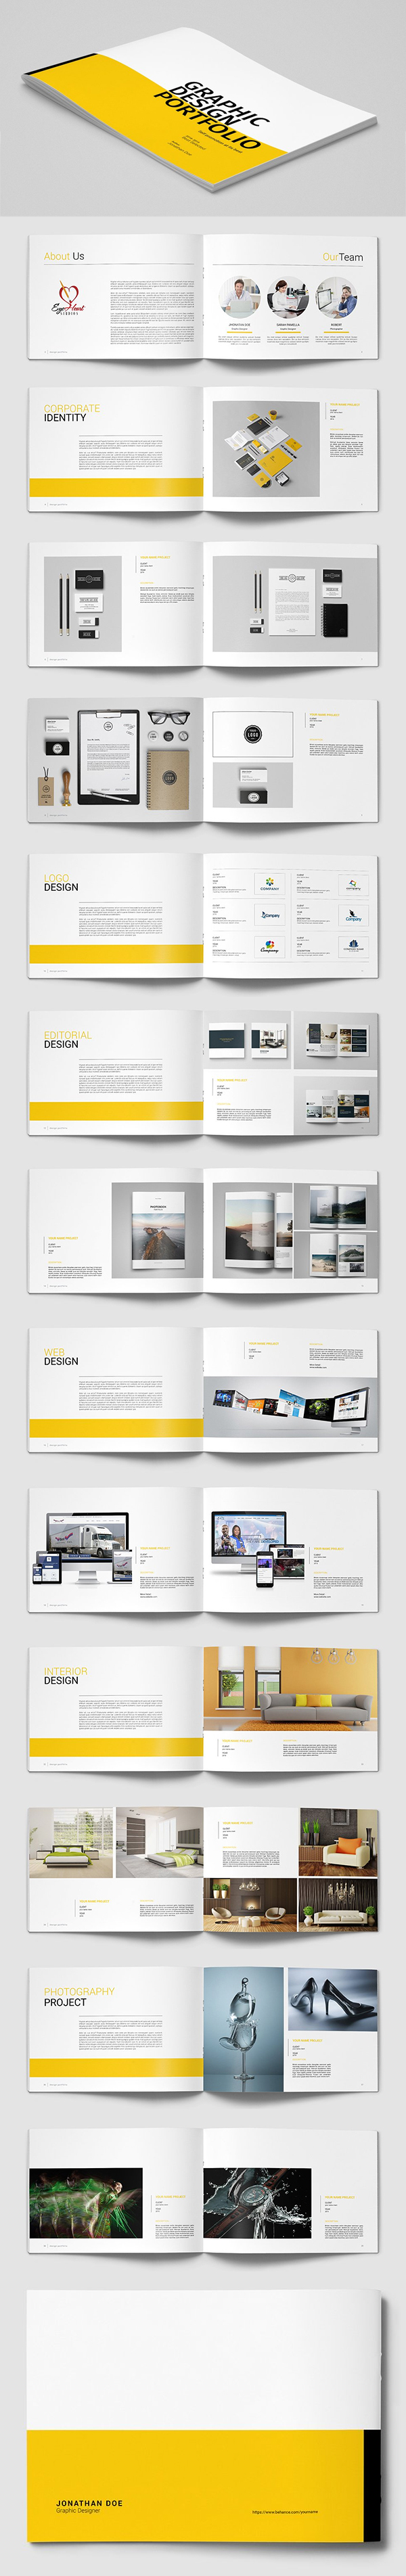 100 Professional Corporate Brochure Templates Design